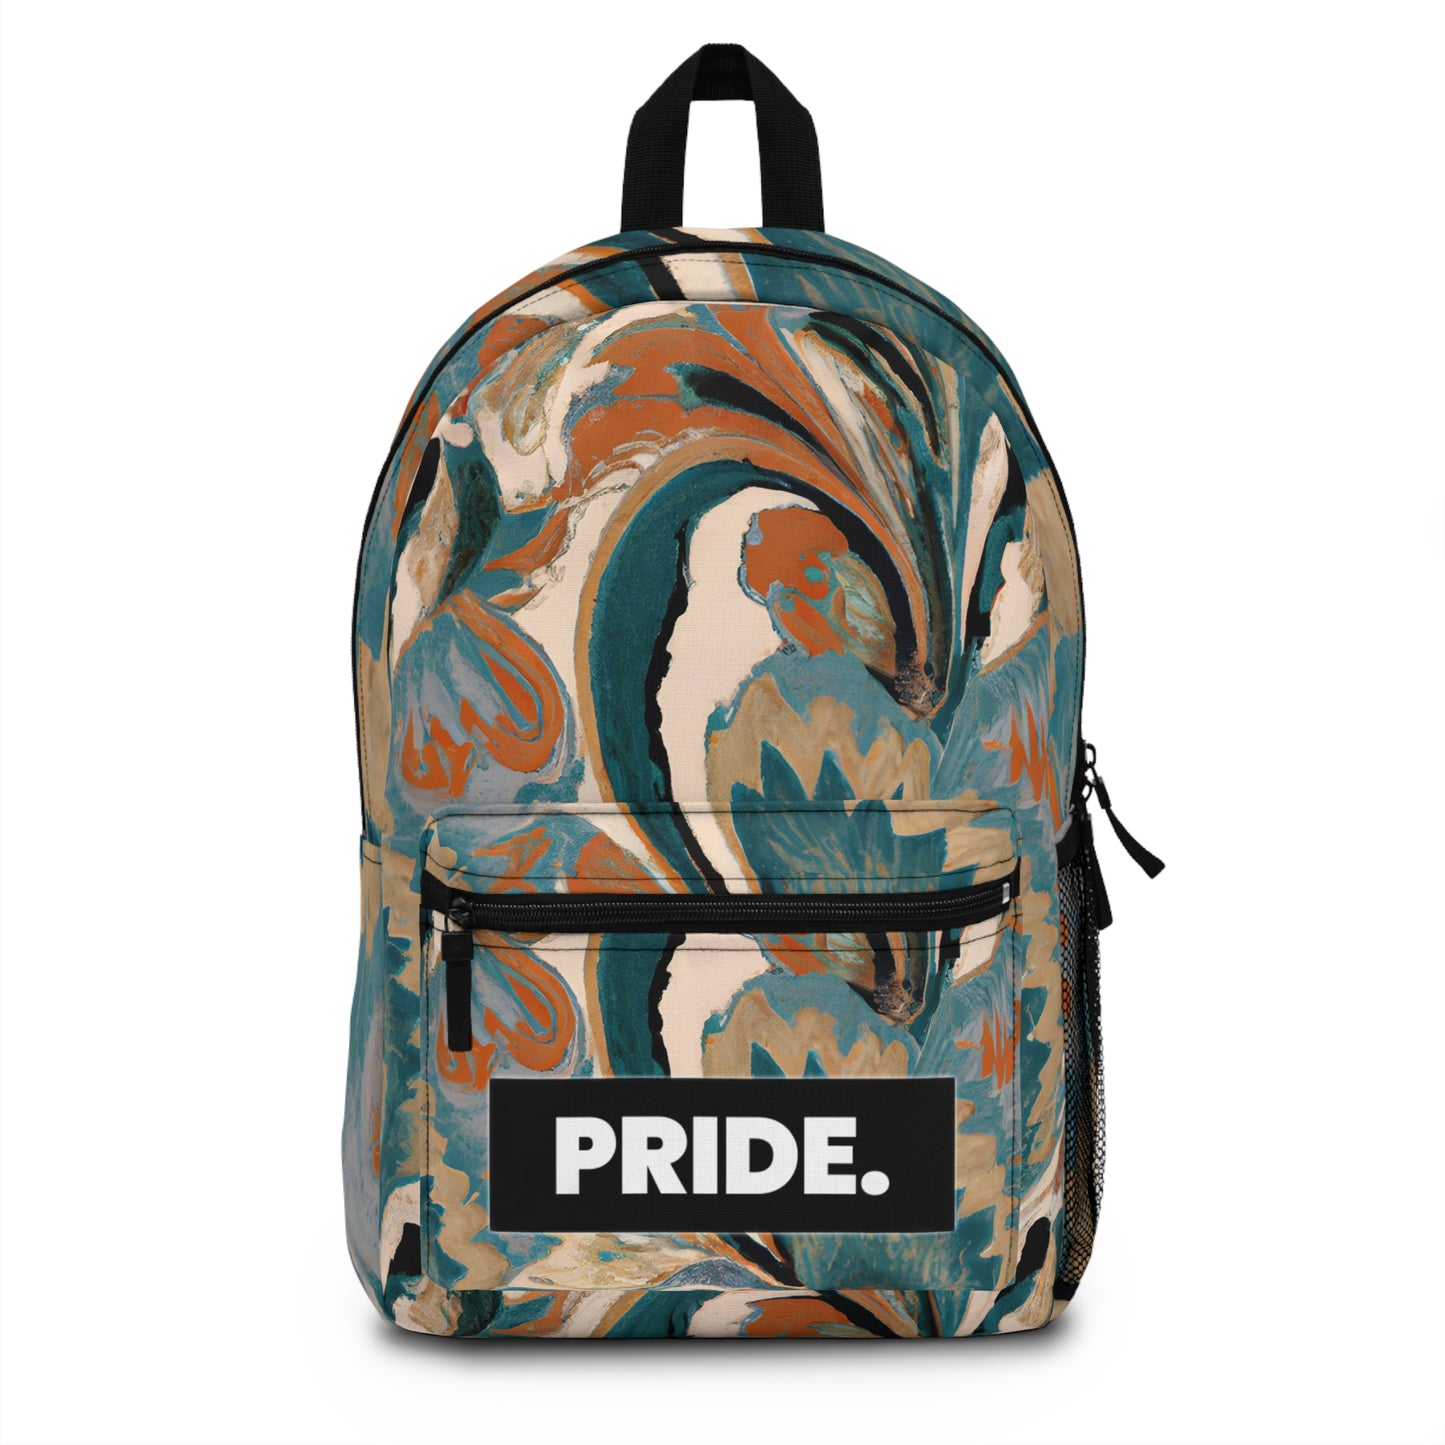 FancyFez - Gay Pride Backpack